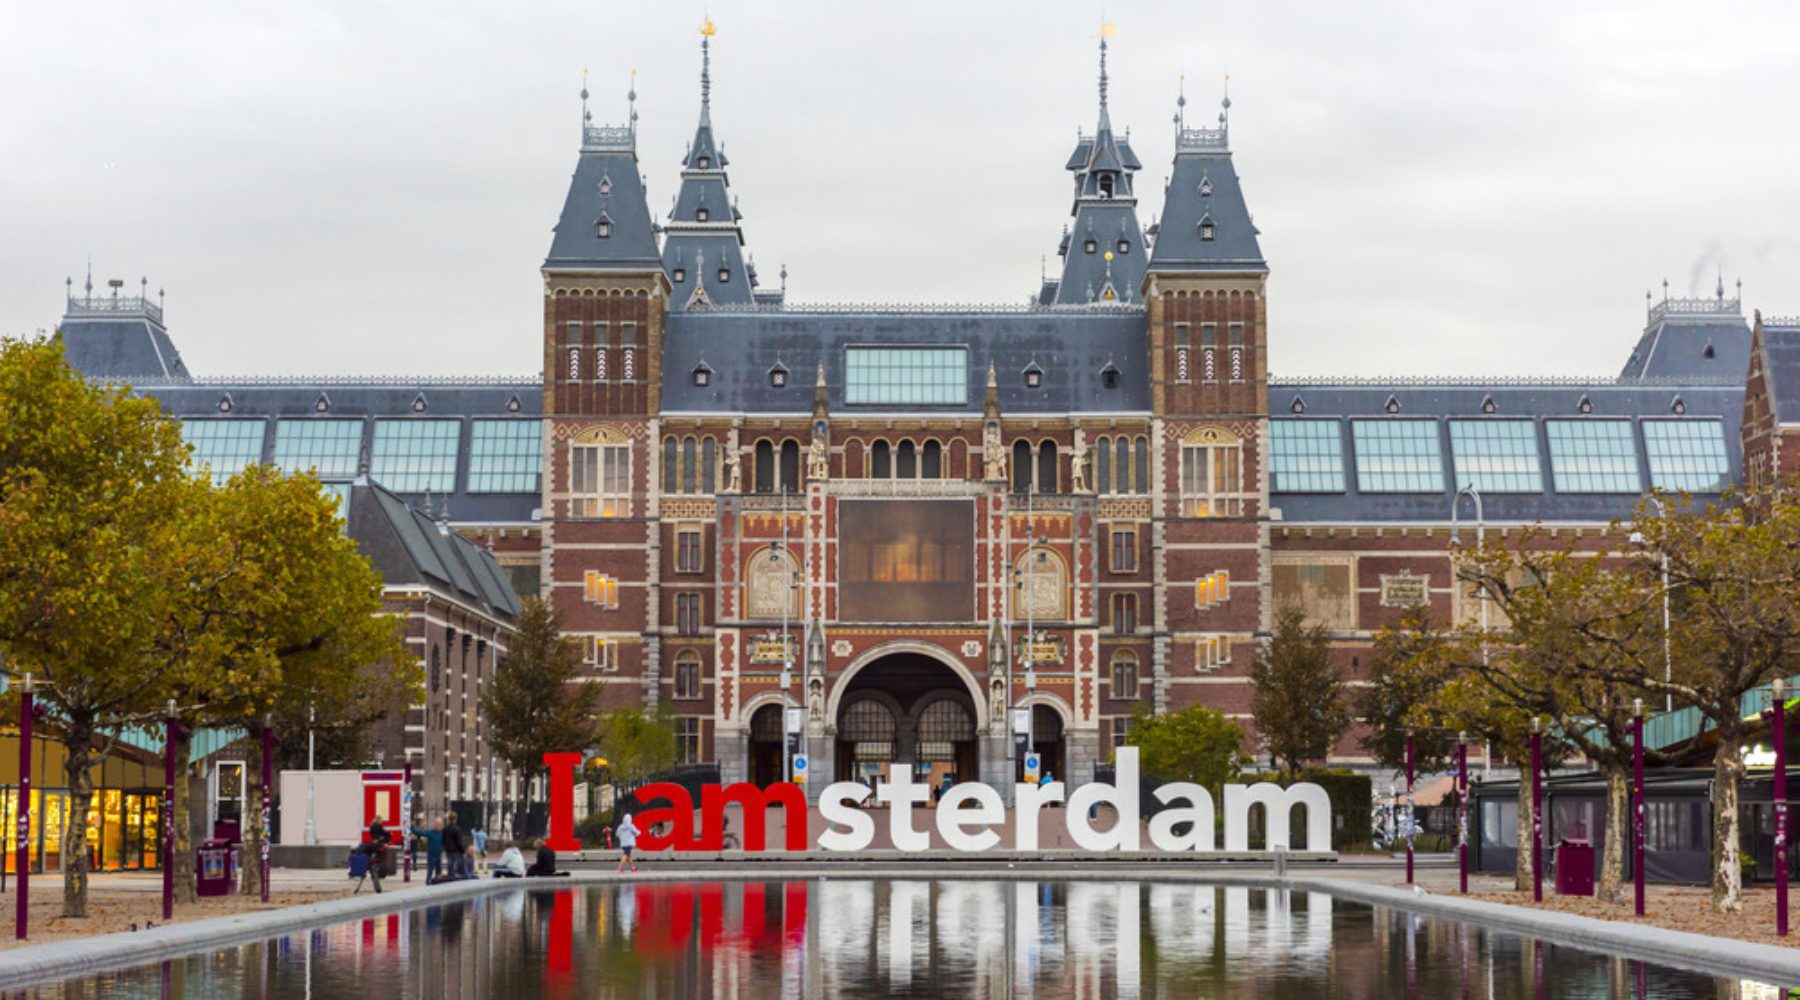 Iamsterdam sign